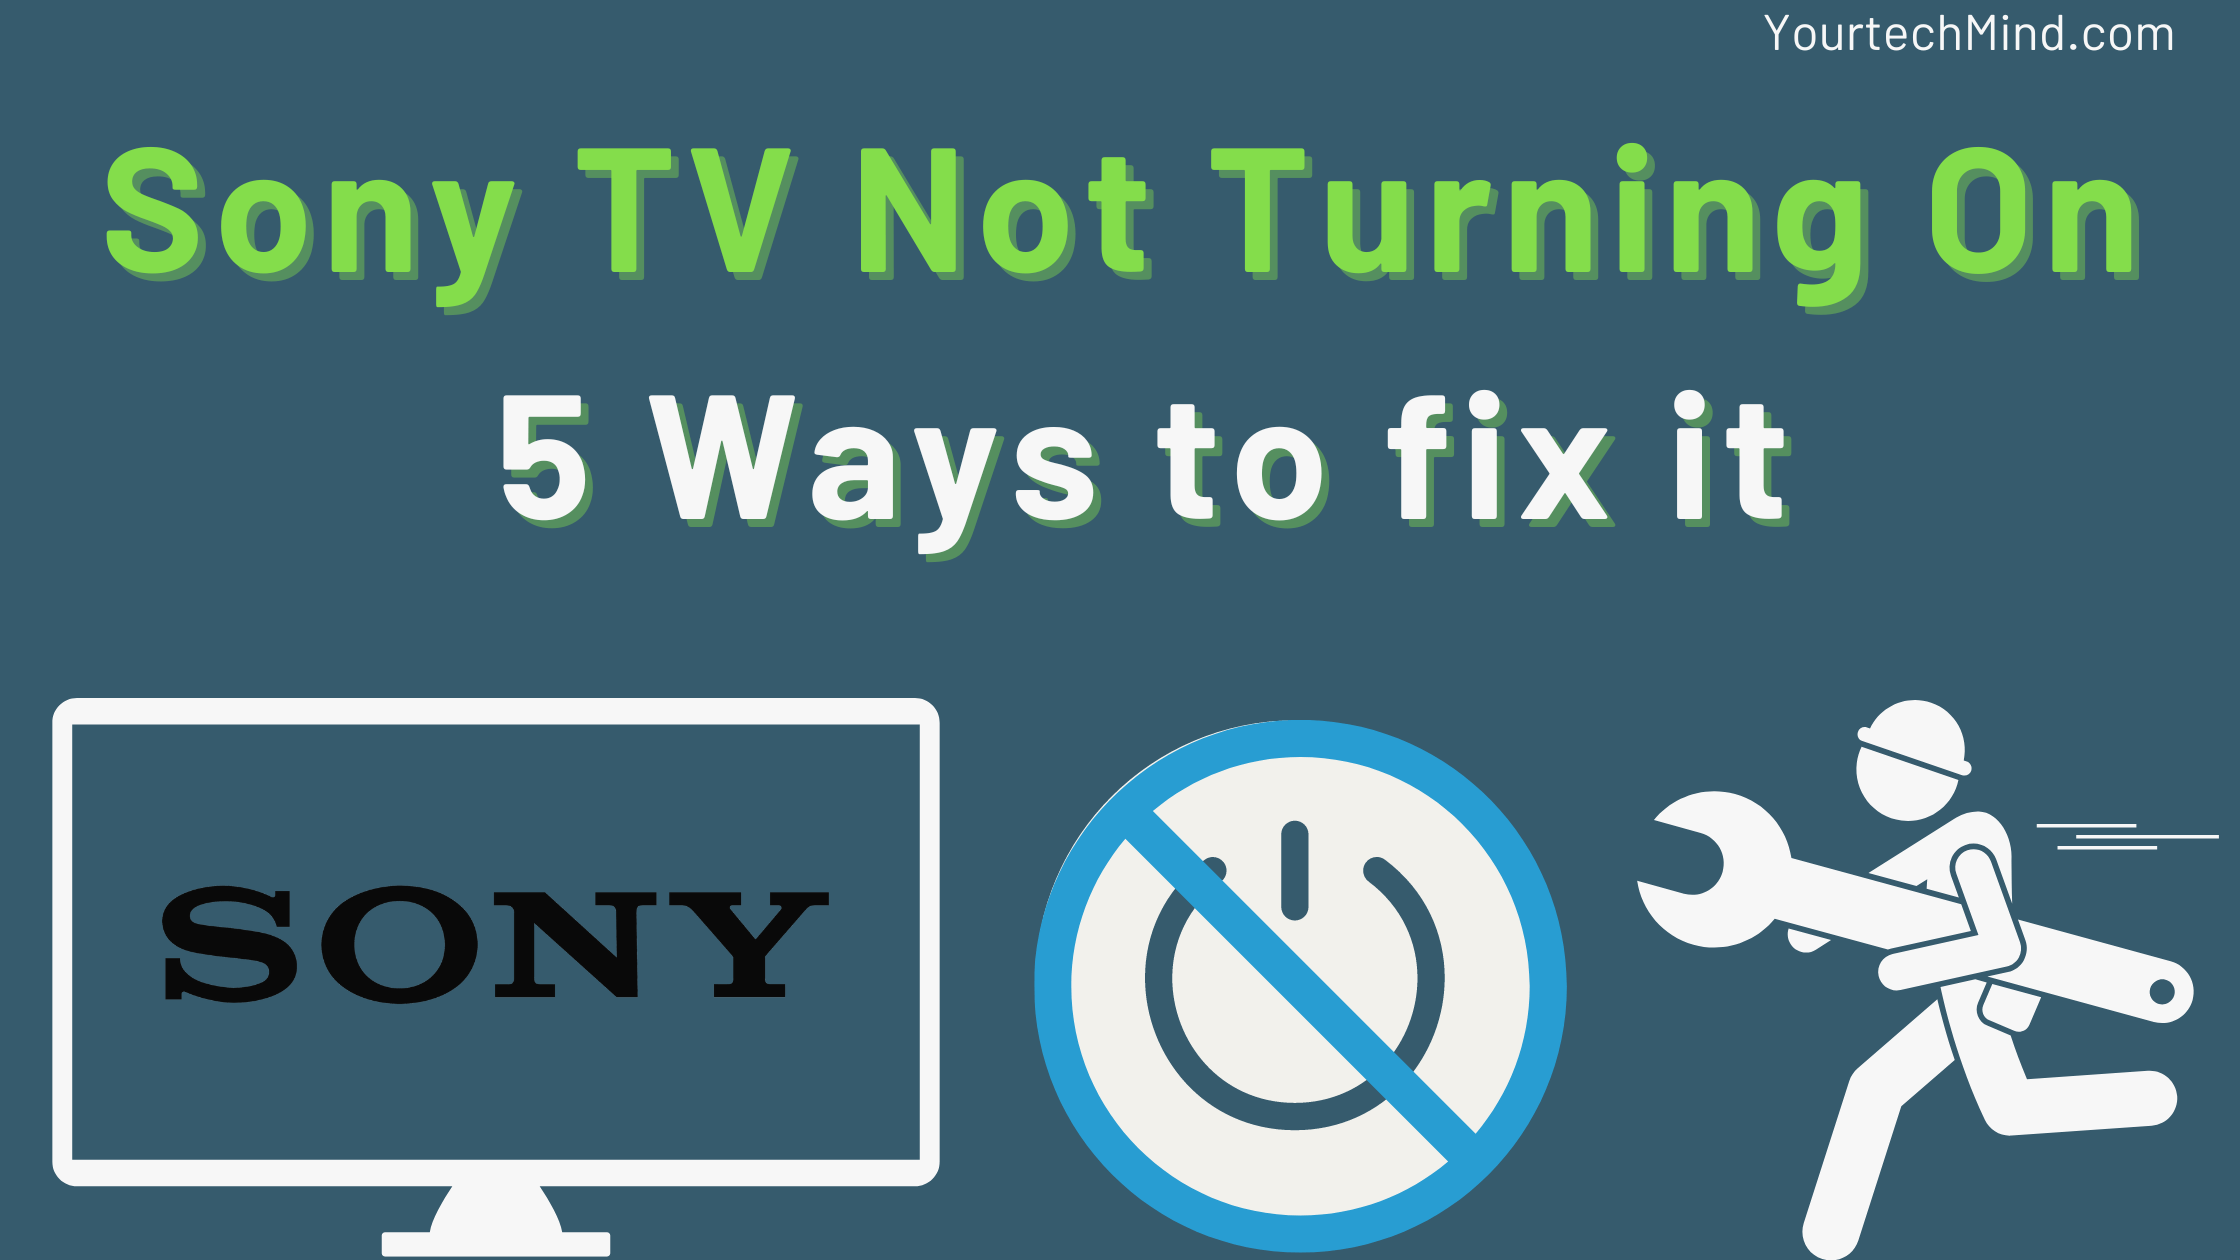 Sony TV Not Turning On